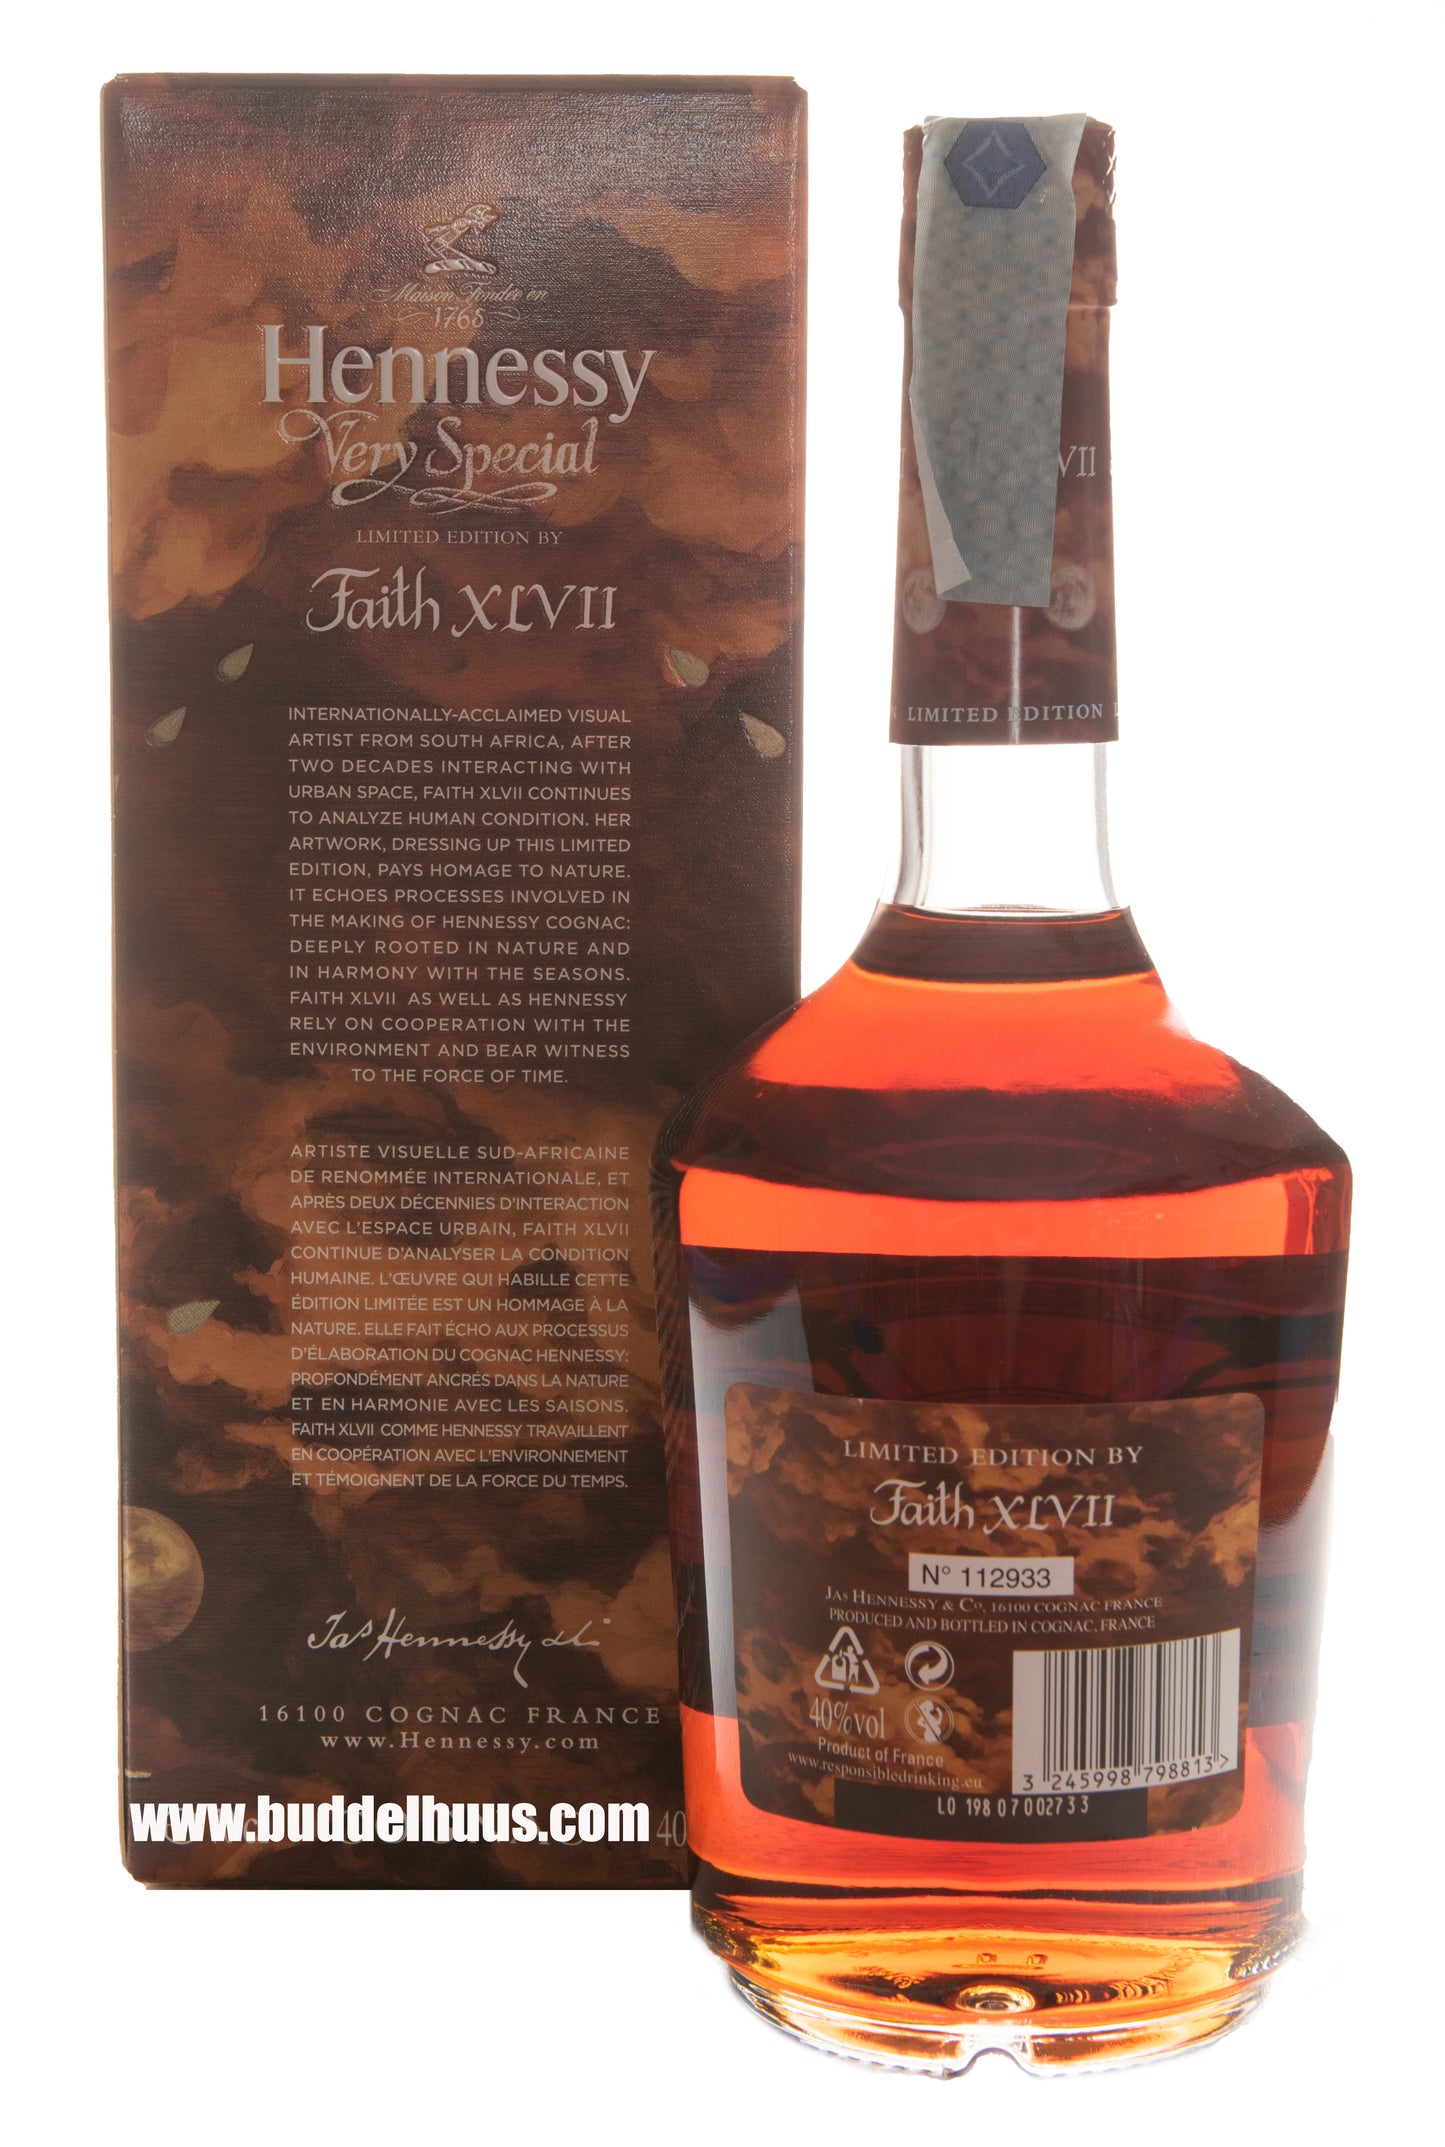 Hennessy Very Special Cognac Limited Edition Faith XLVII